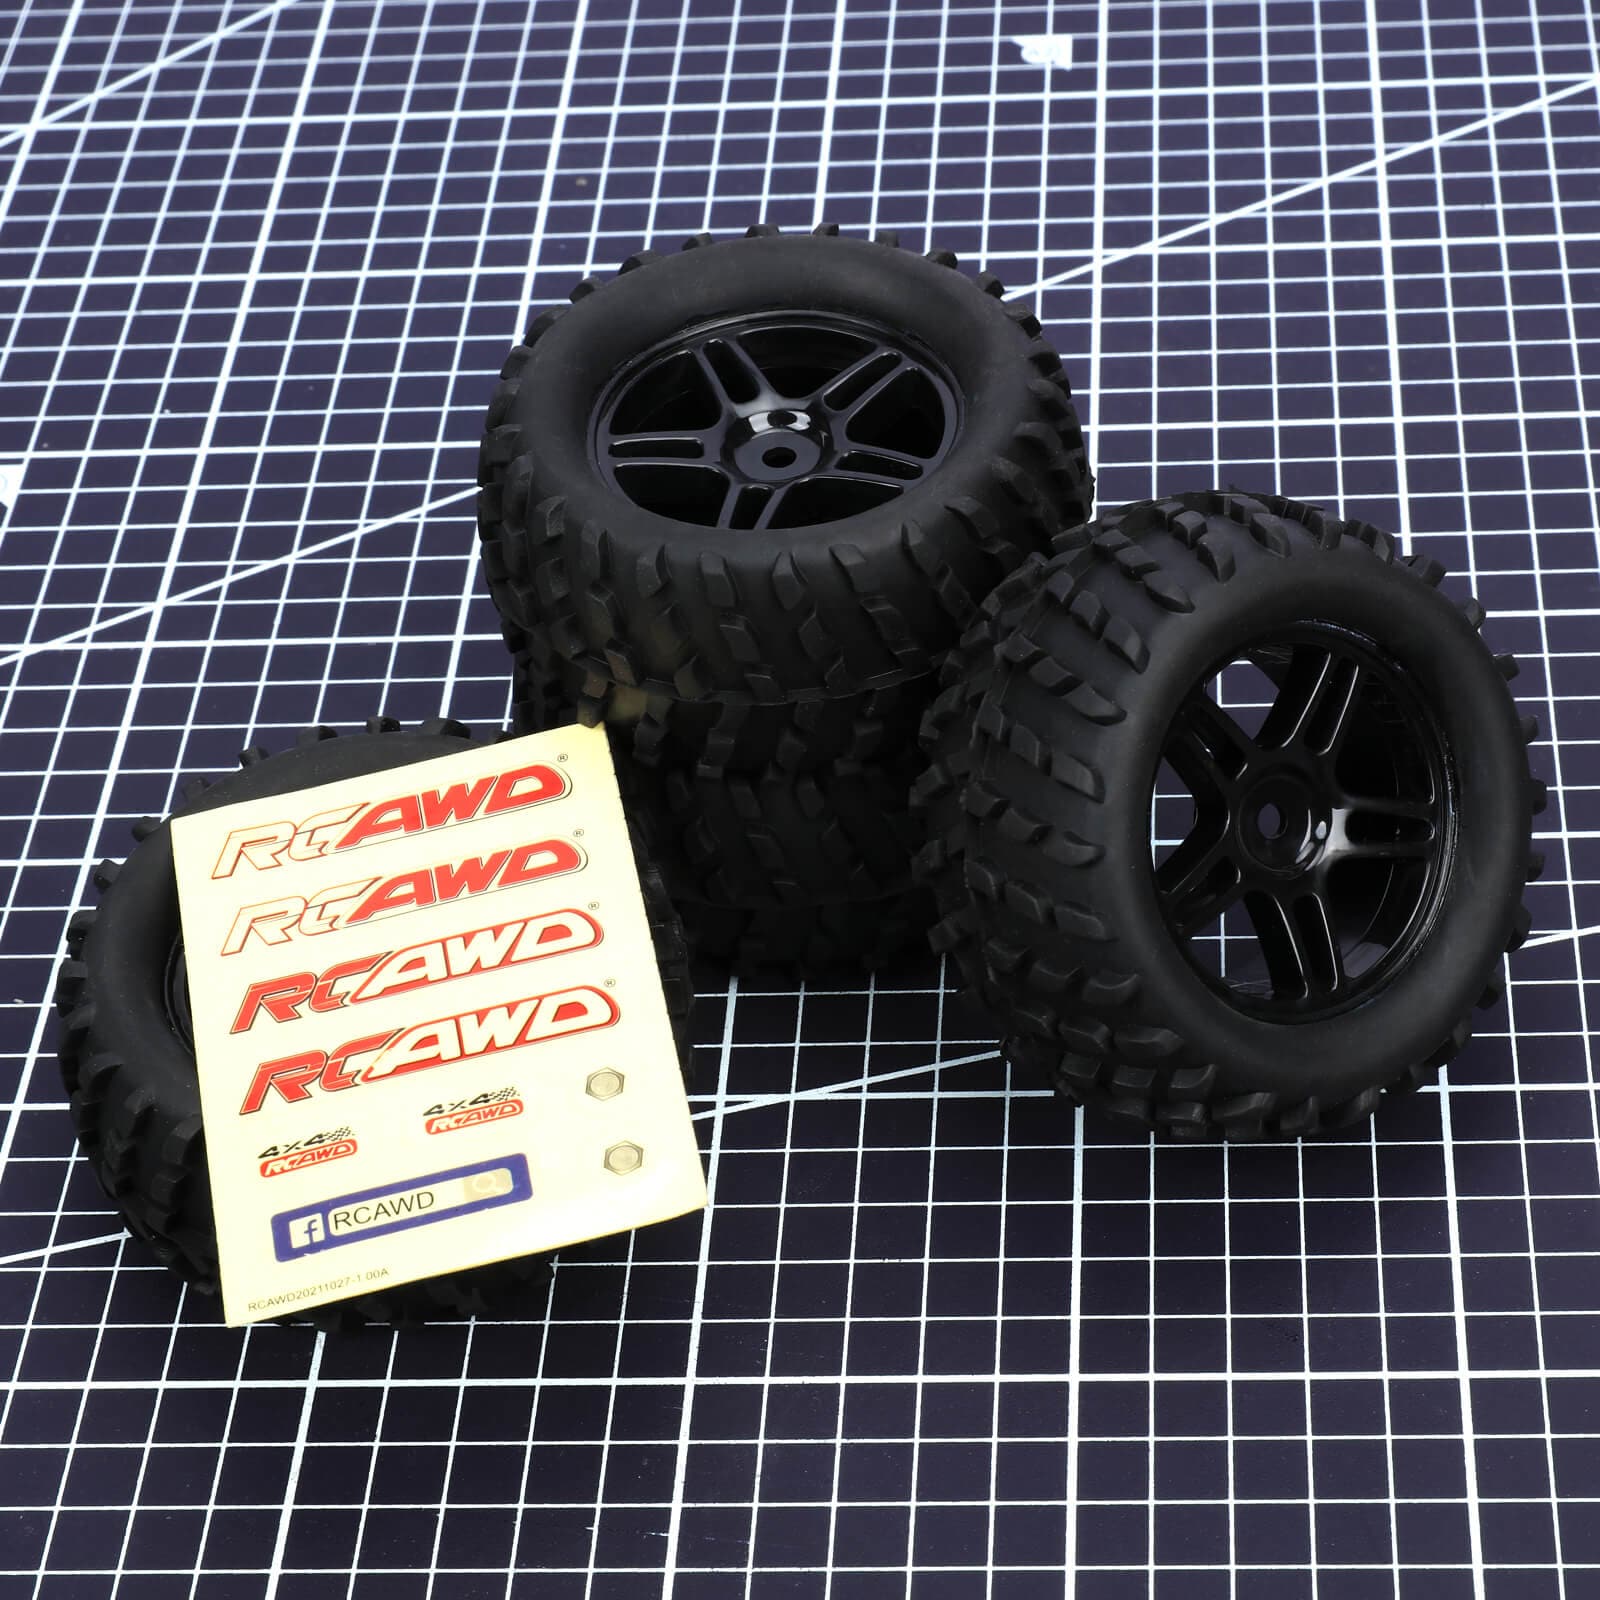 RCAWD Amazon RC Wheel & Tires 1/16 Pre-glued RC Monster Truck wheel Tires LG-007BL LG-008BL